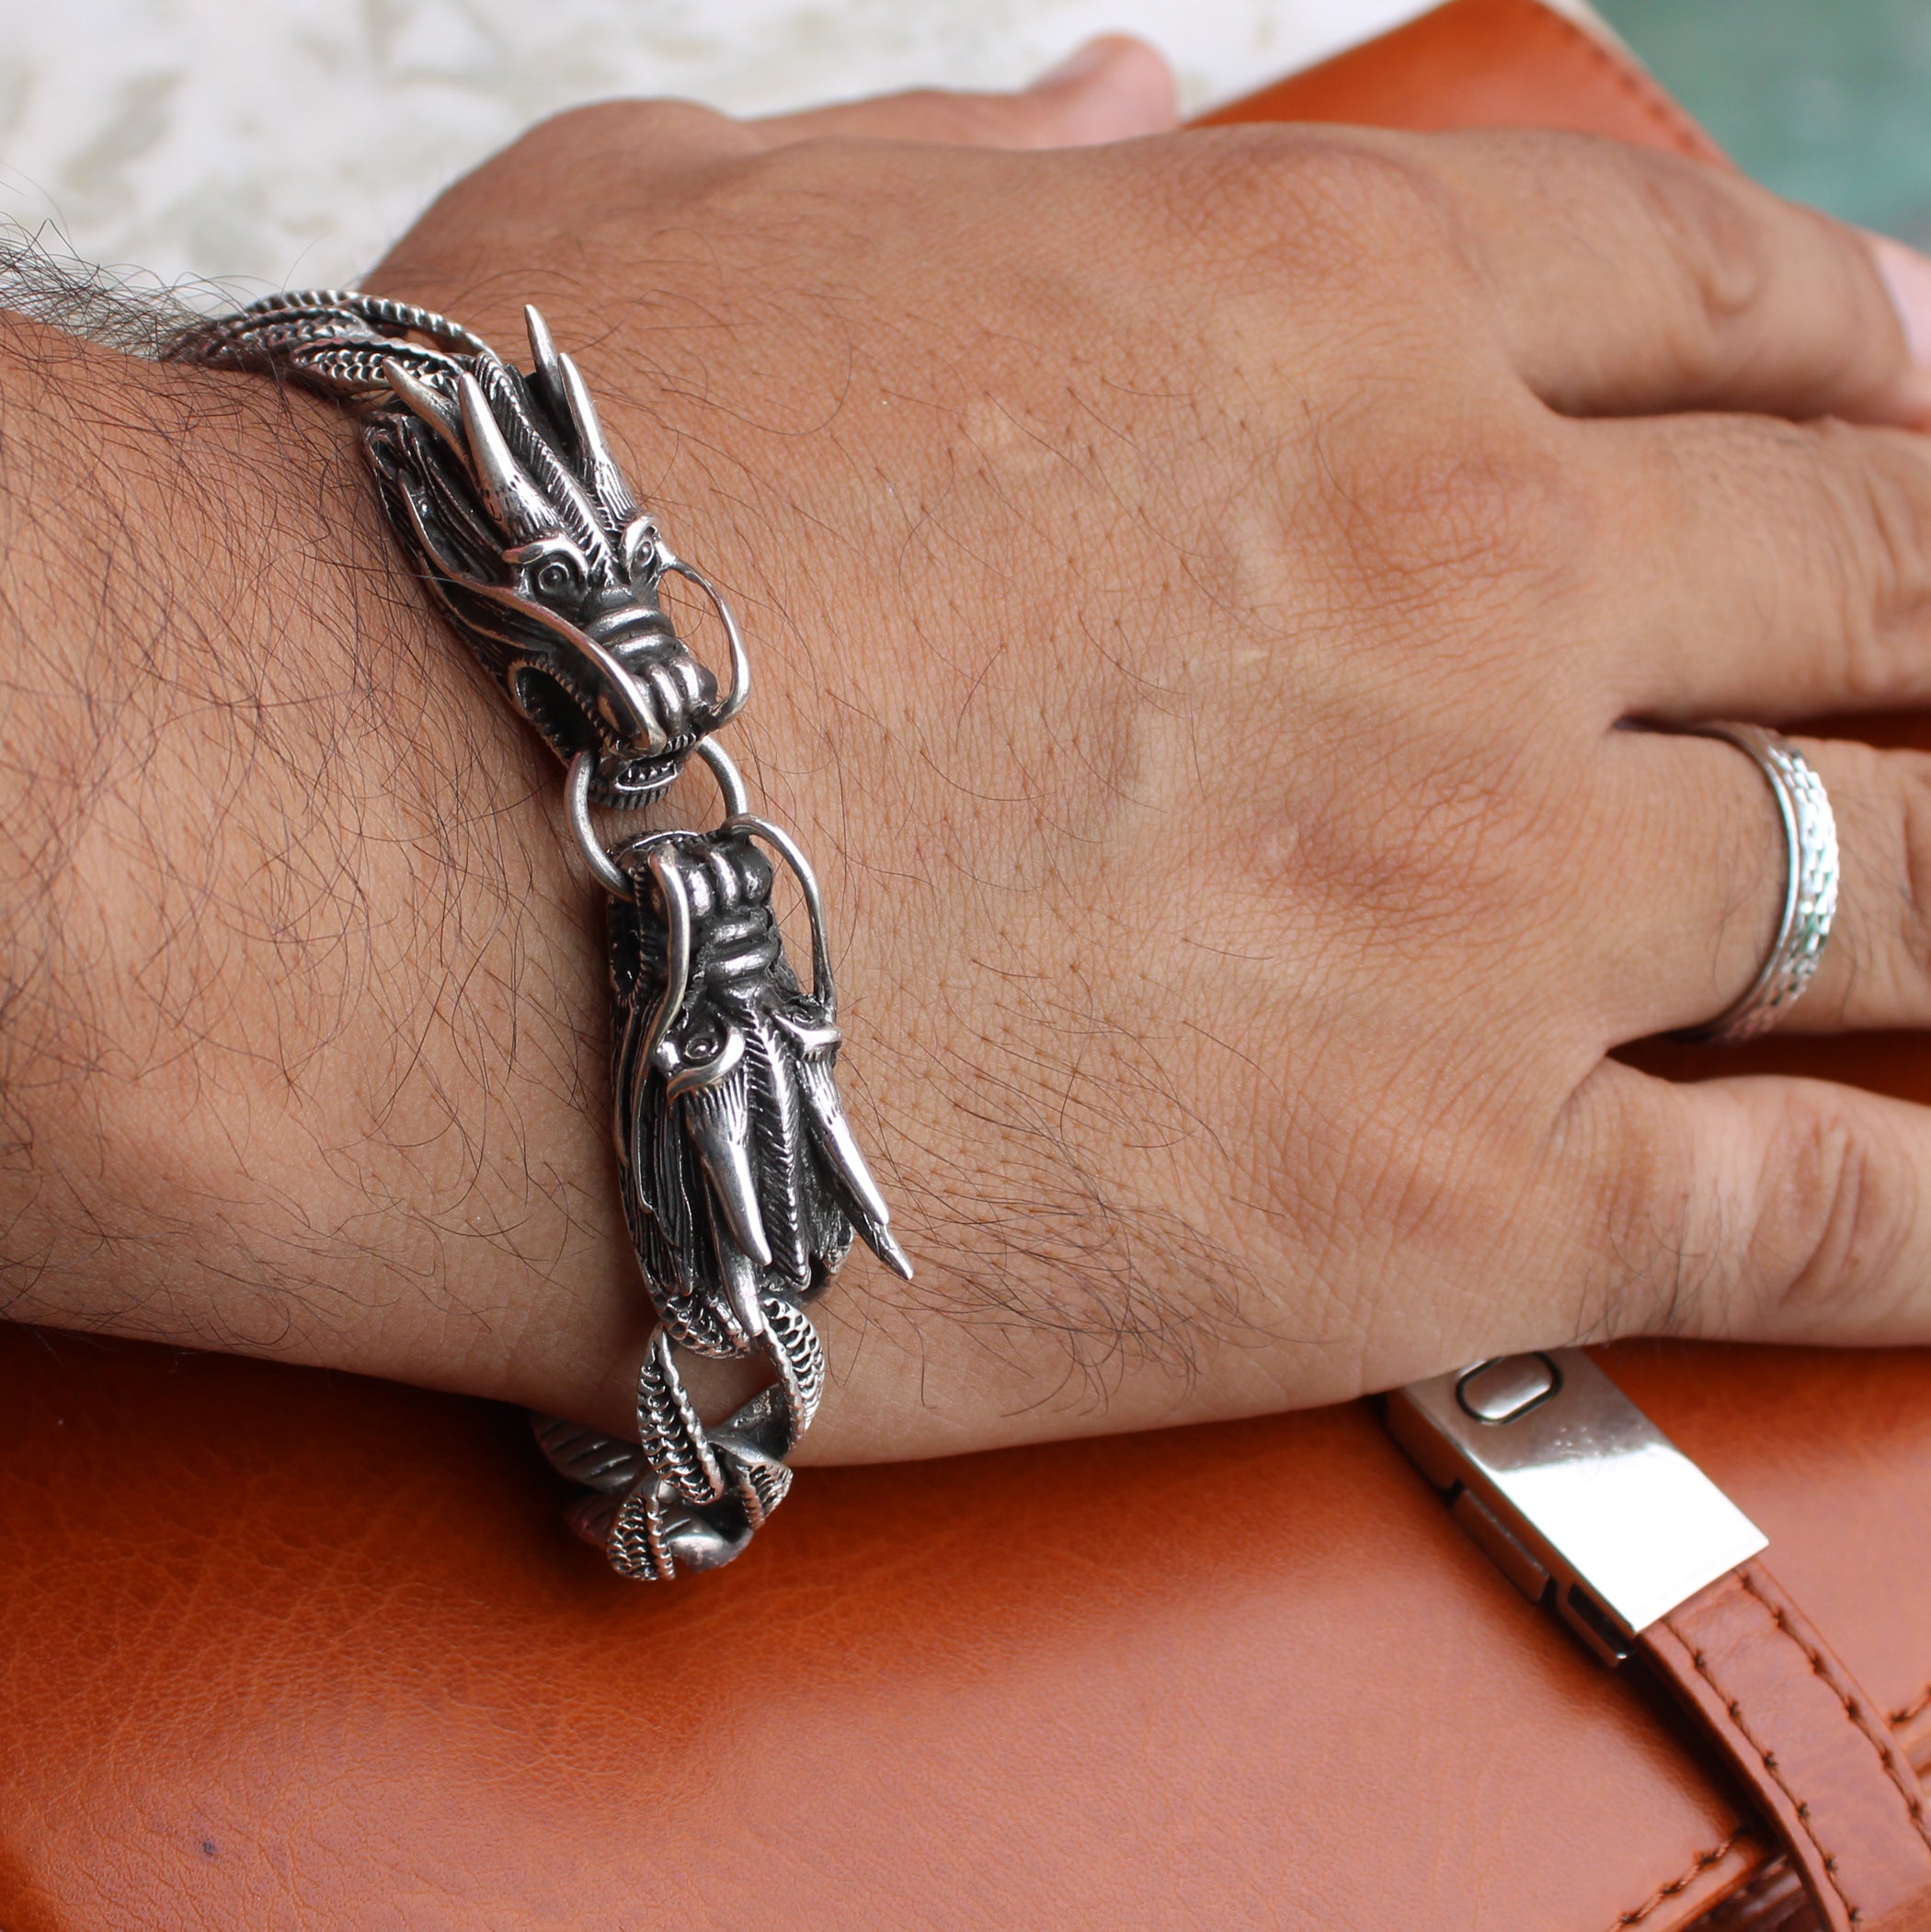 Ulyta jewelry bracelet under 100 rupees